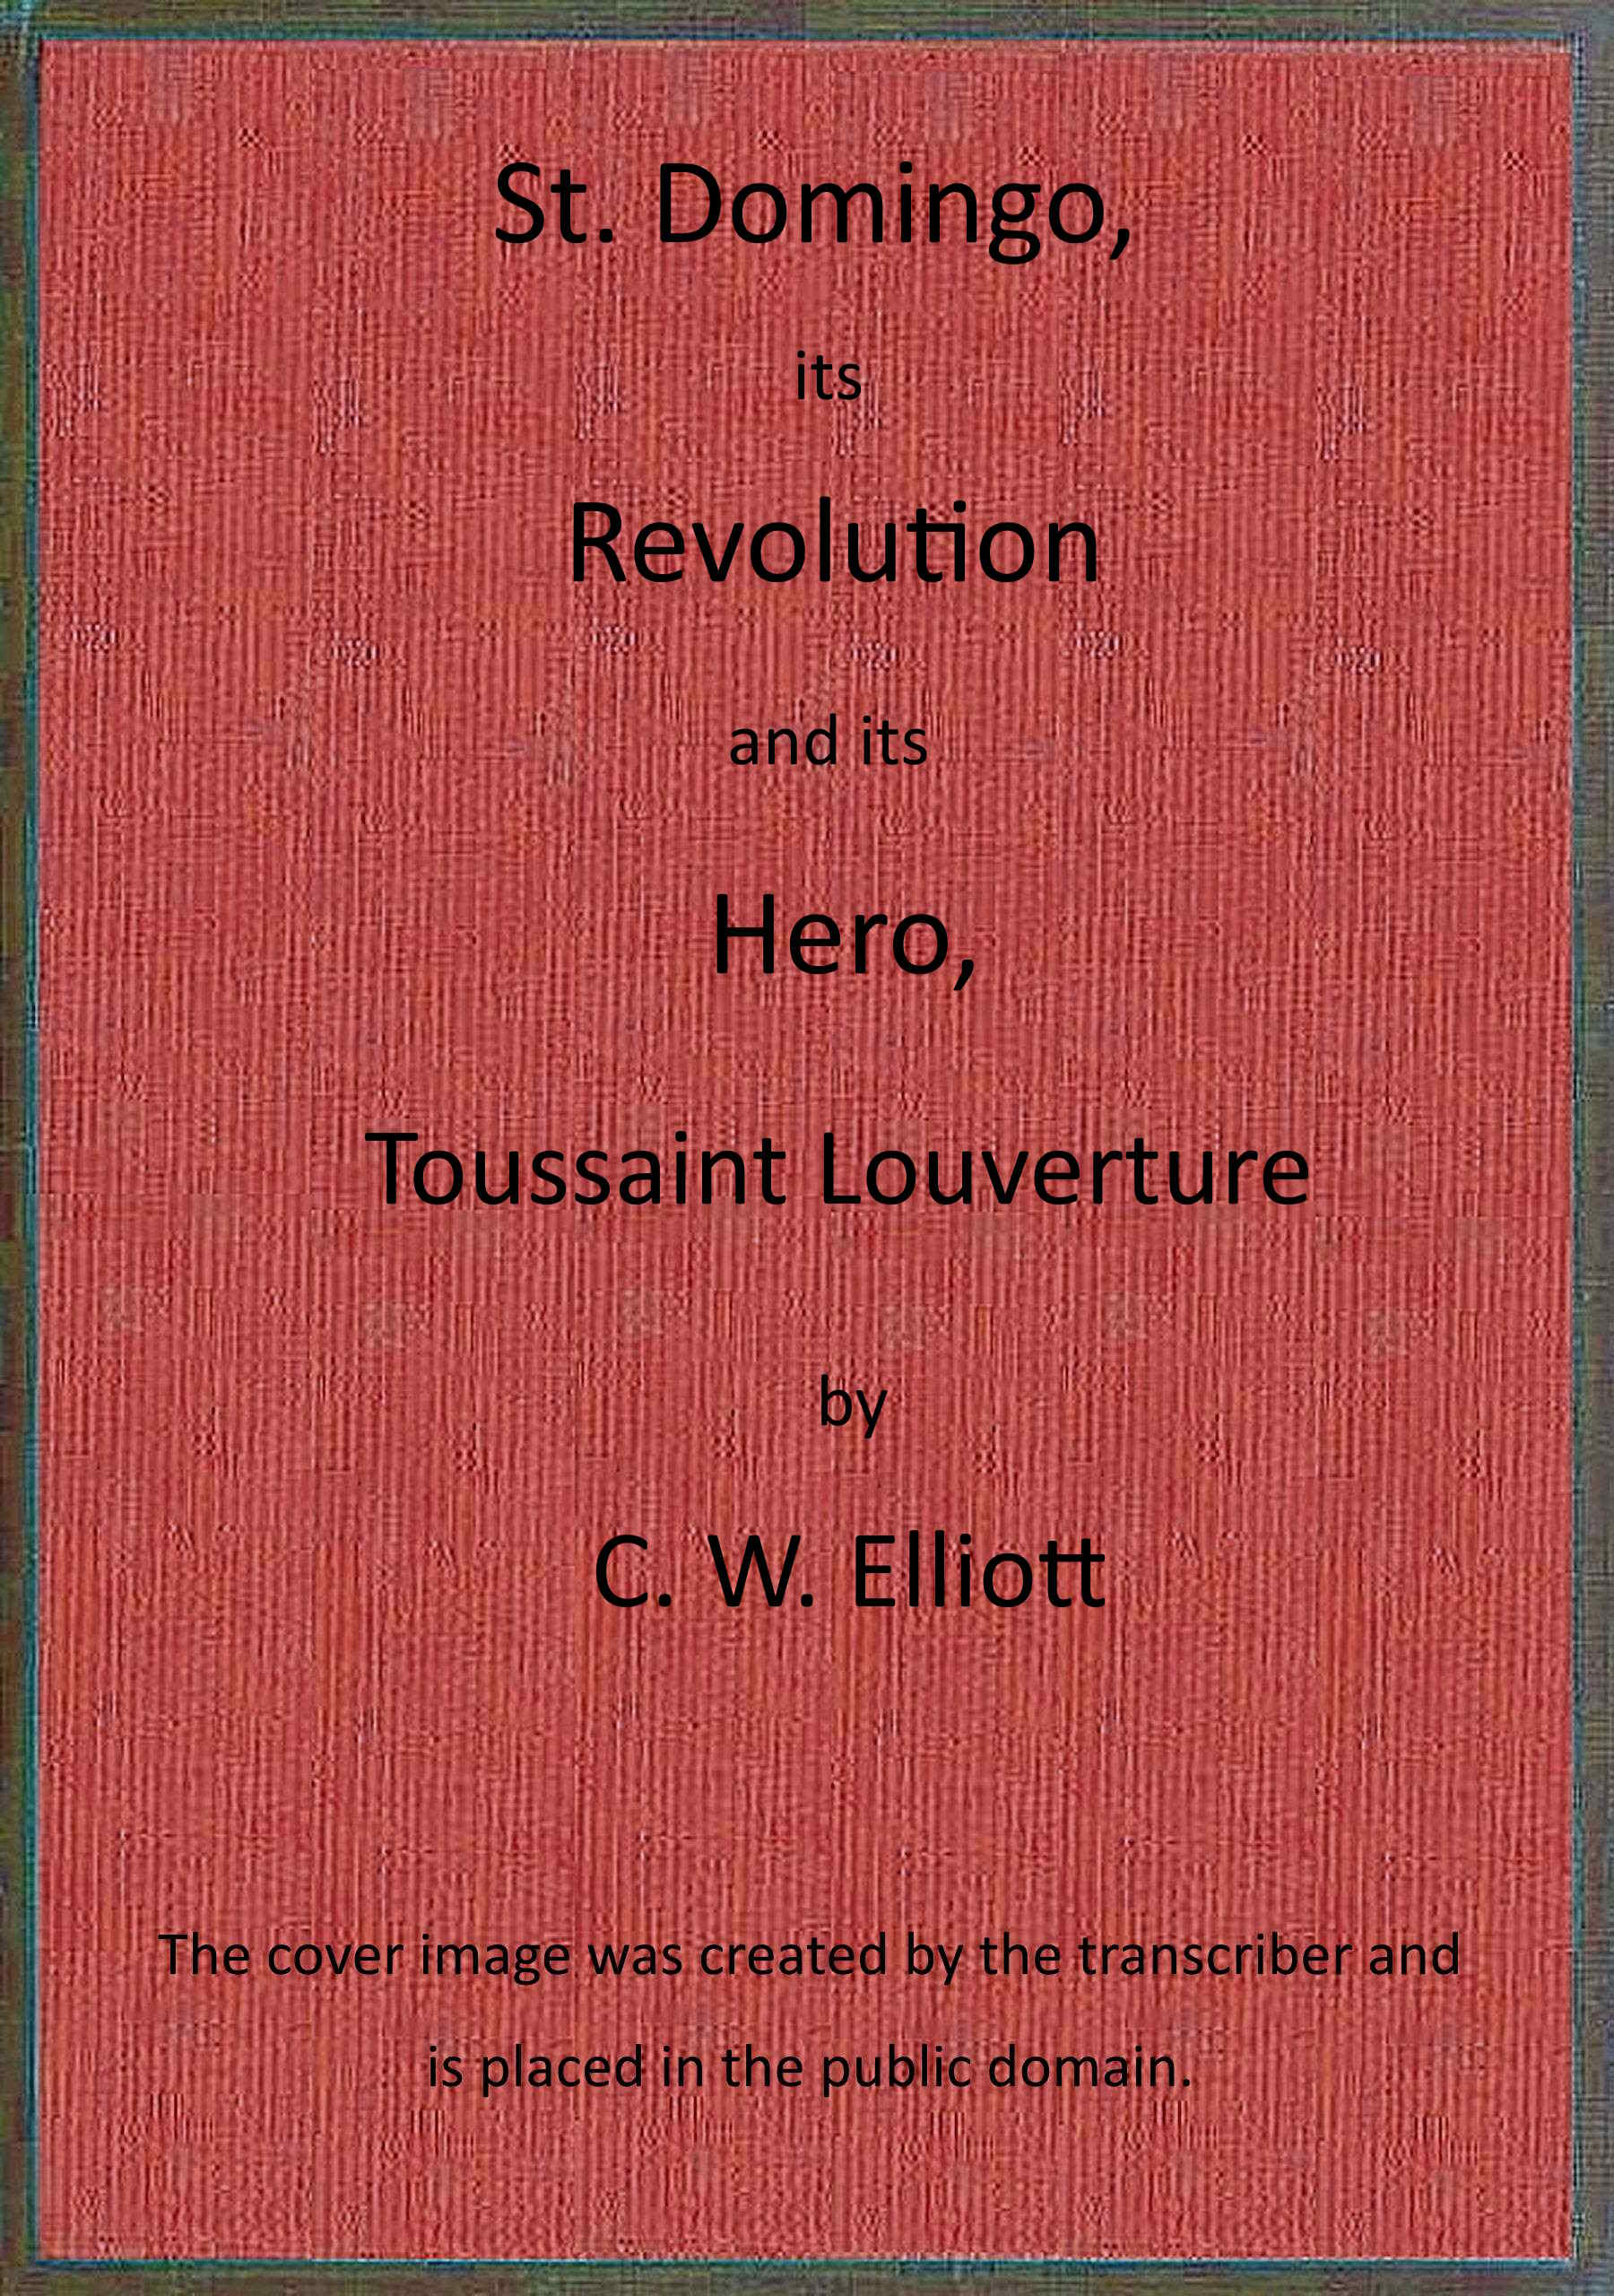 St. Domingo, its revolution and its hero, Toussaint Louverture.